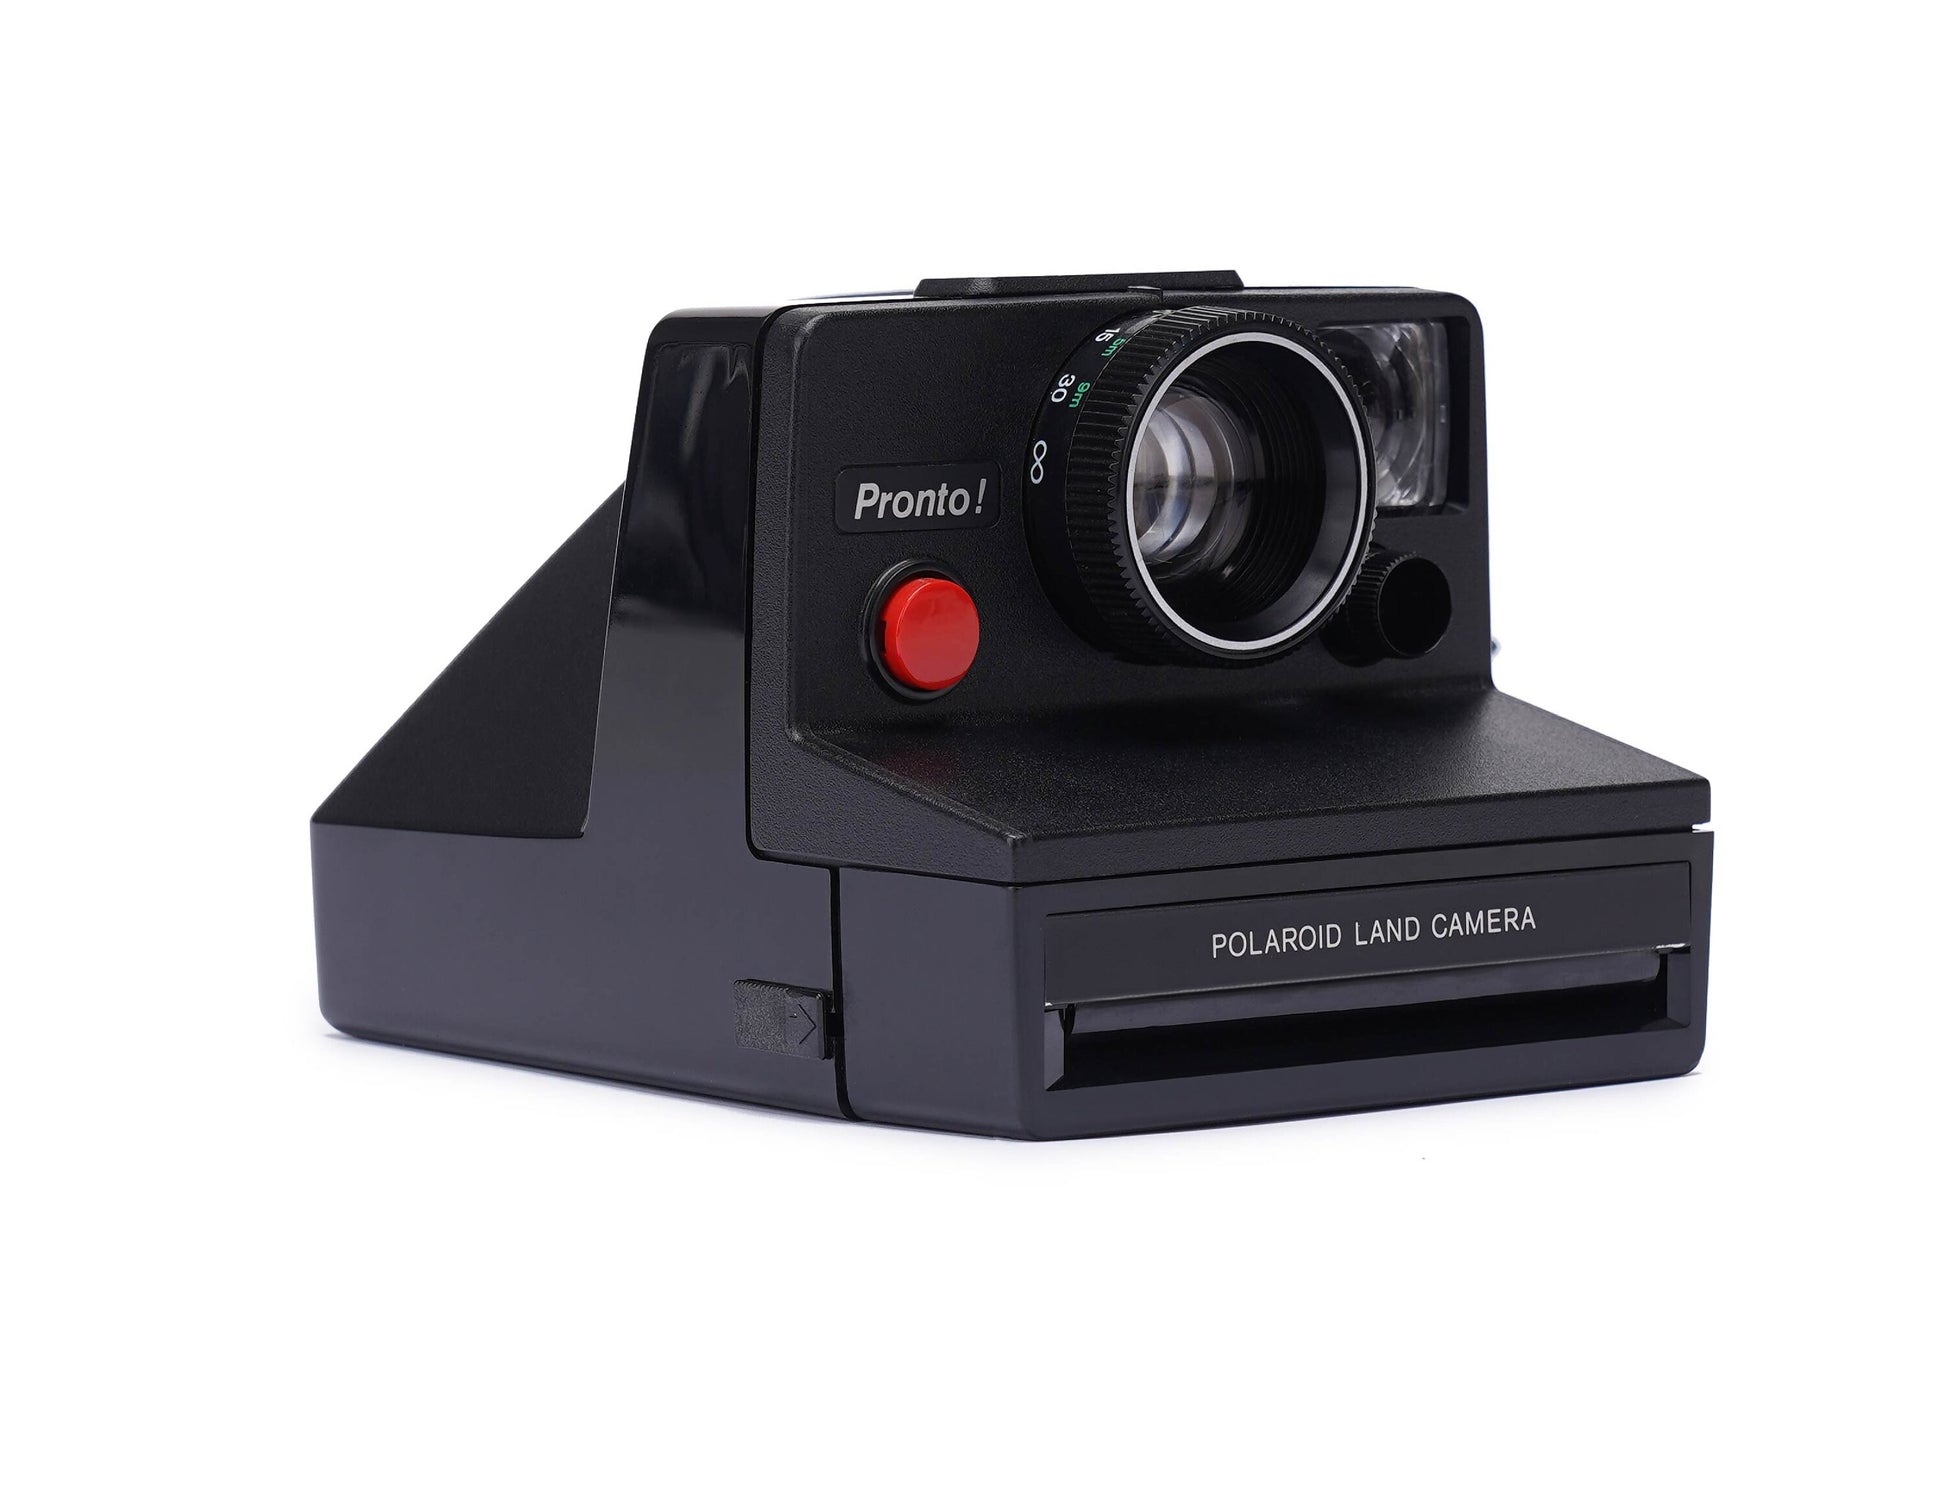 Vintage Polaroid SX-70 & Pronto - Retro Instant Camera Collection - Perfect Photographer's Gift - Classic Polaroid Charm - Vintage Polaroid Instant Cameras